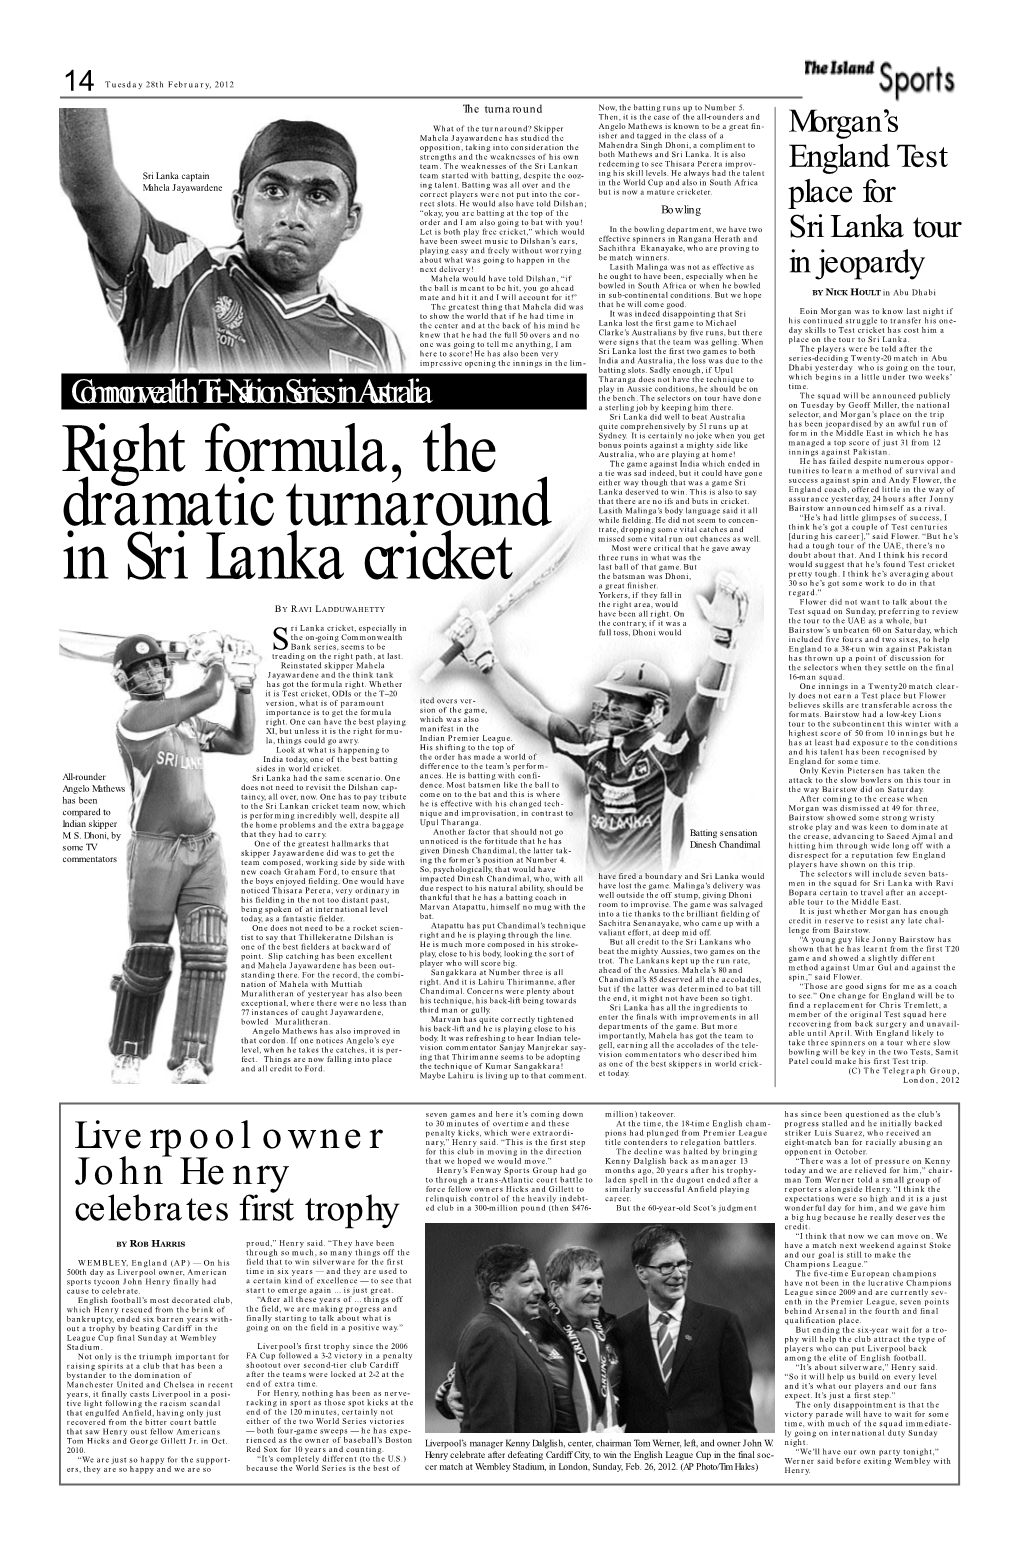 Right Formula, the Dramatic Turnaround in Sri Lanka Cricket